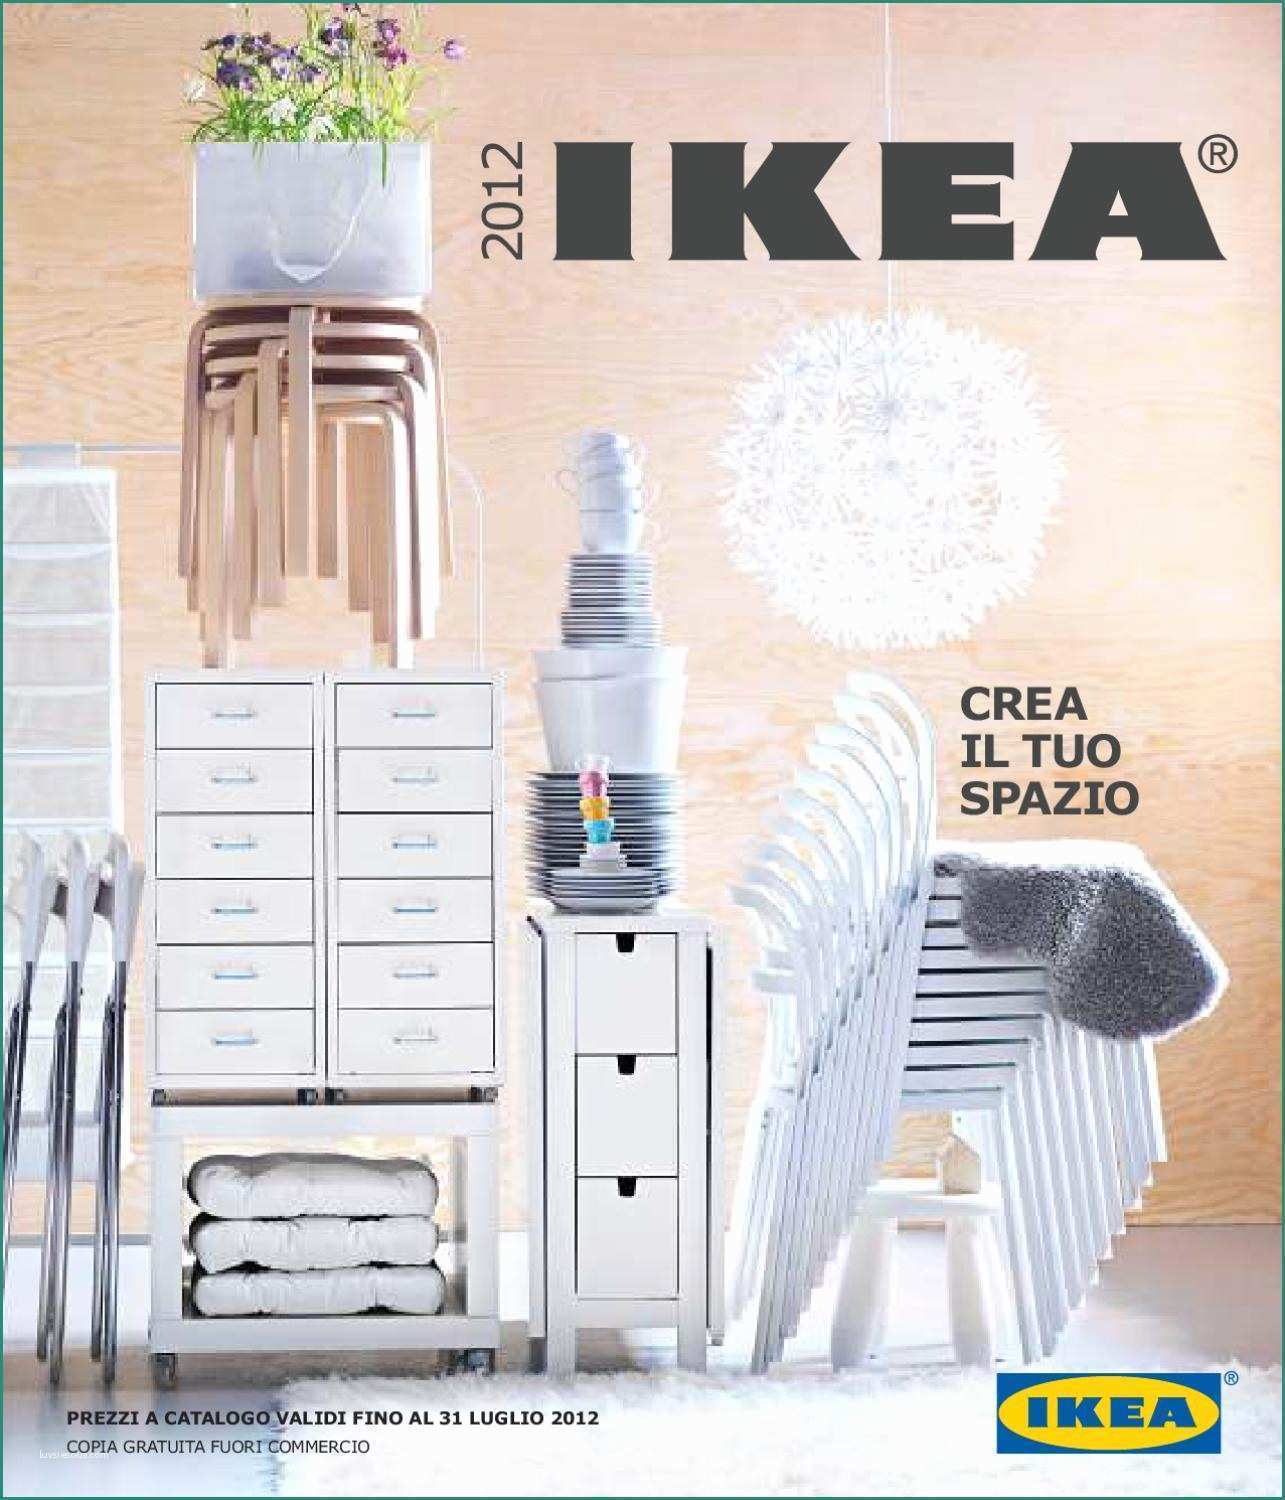 Divani Reclinabili Elettrici E Catalogo Ikea Italia 2012 by Catalogopromozioni issuu